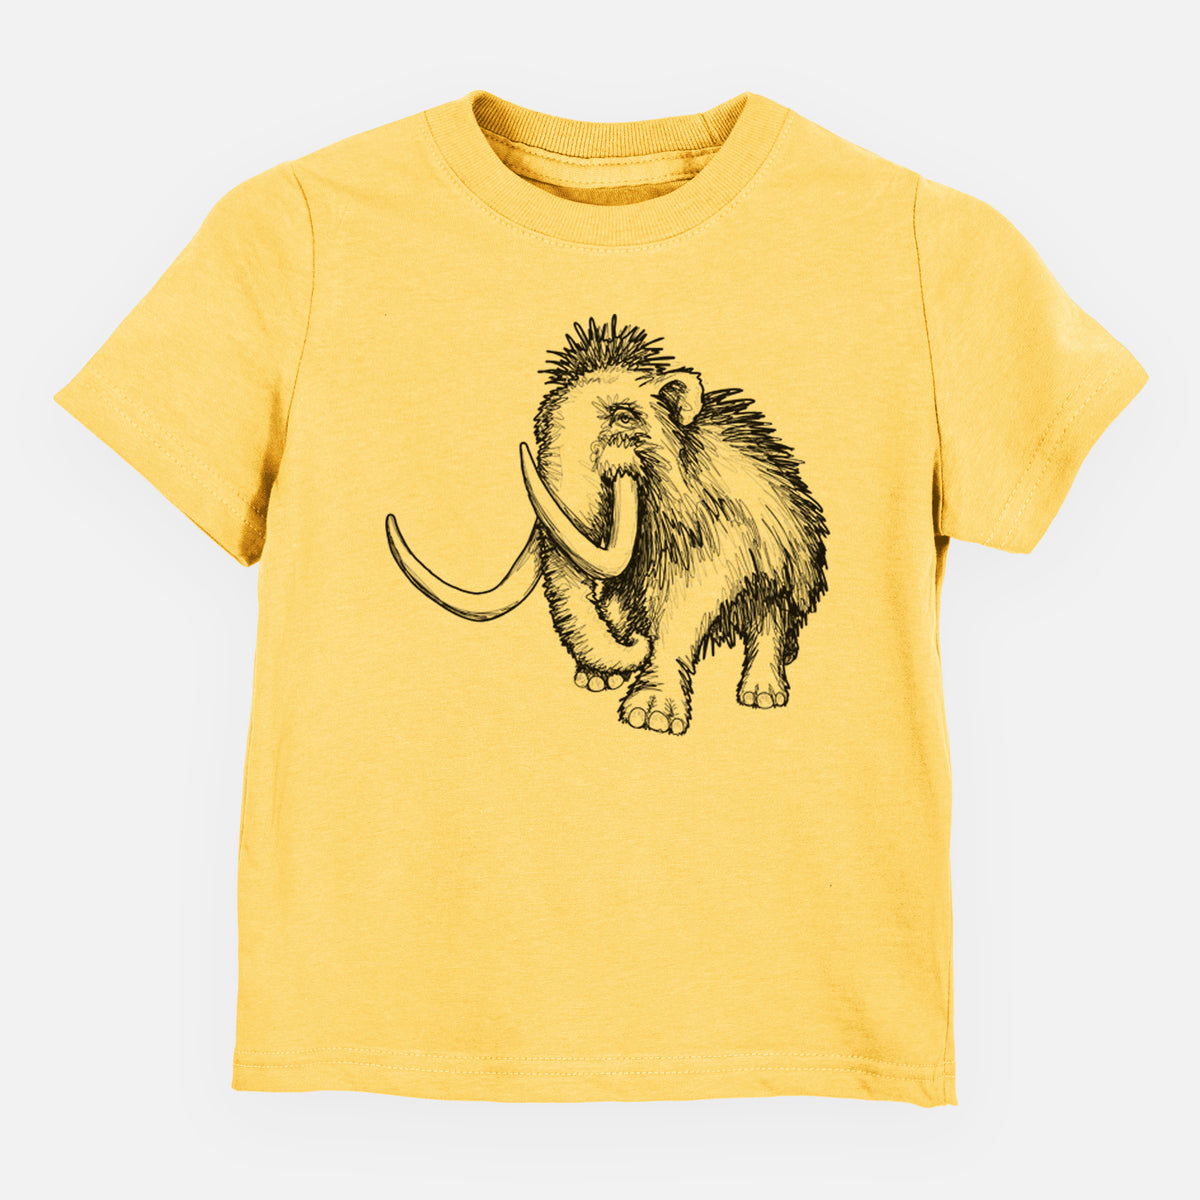 Woolly Mammoth - Mammuthus Primigenius - Kids Shirt